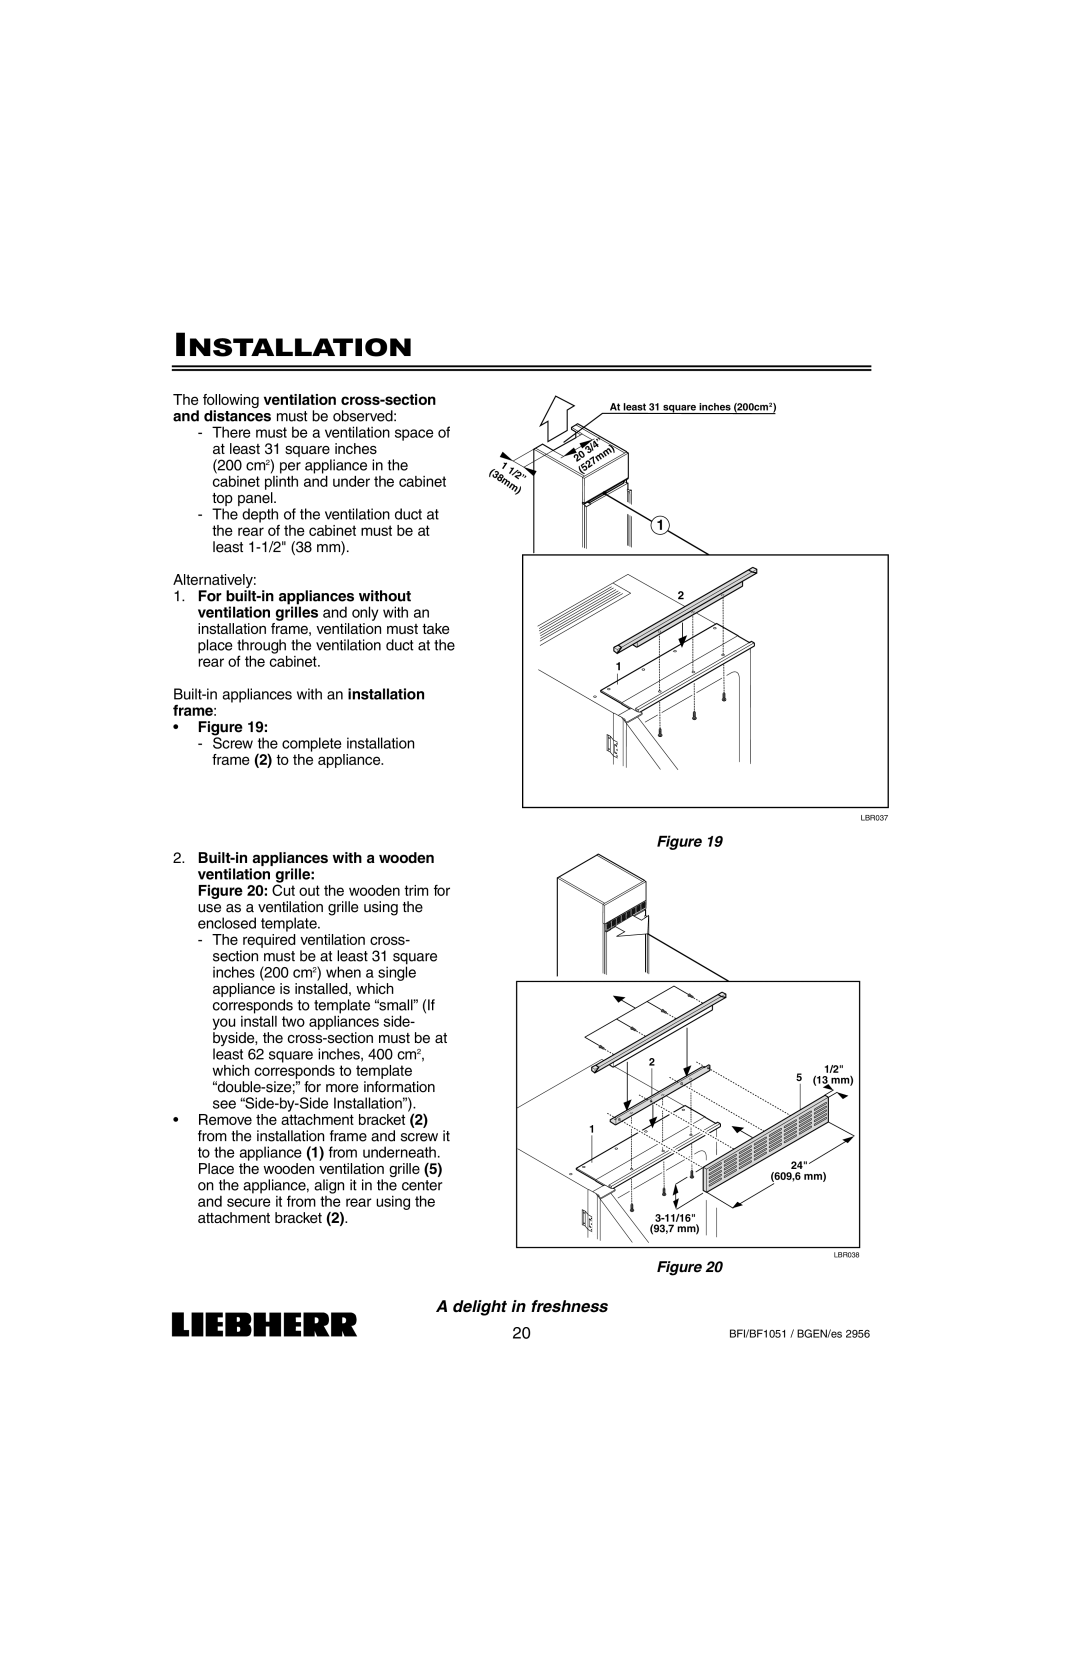 Liebherr BFI1051, BF1051 installation instructions Installation, A delight in freshness, •Figure 